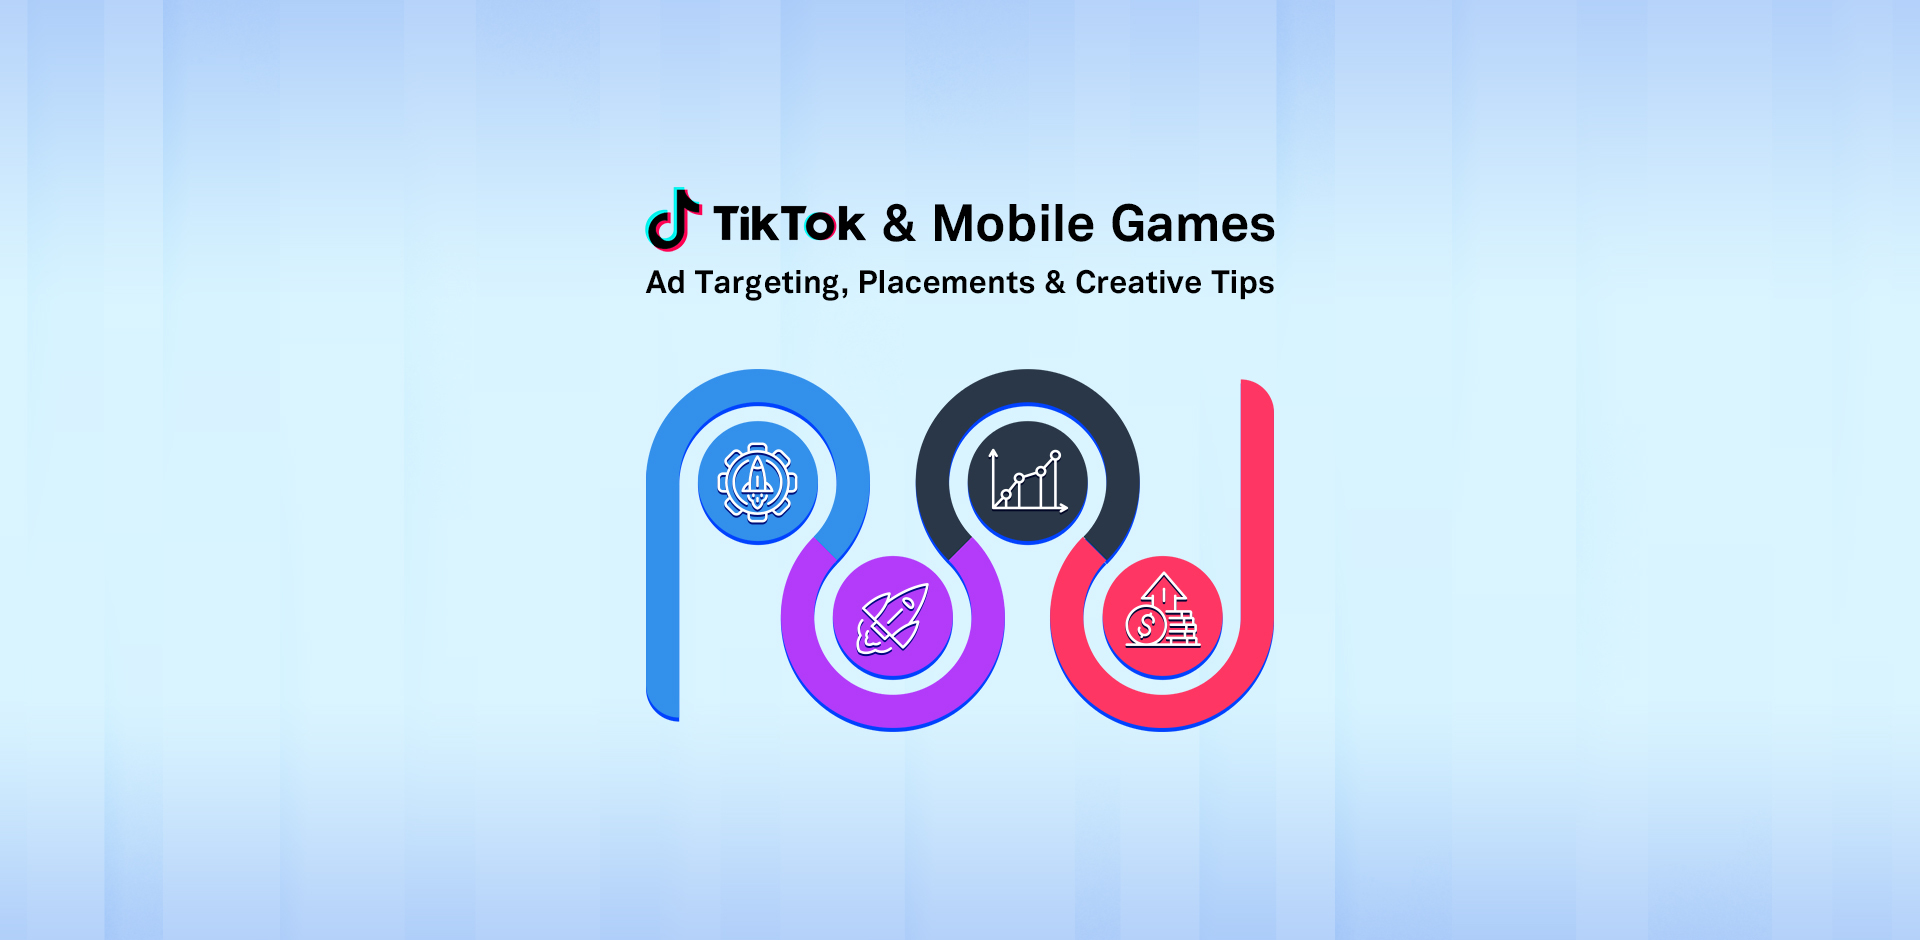 TikTok & Mobile Games in 2022 [Infographic]